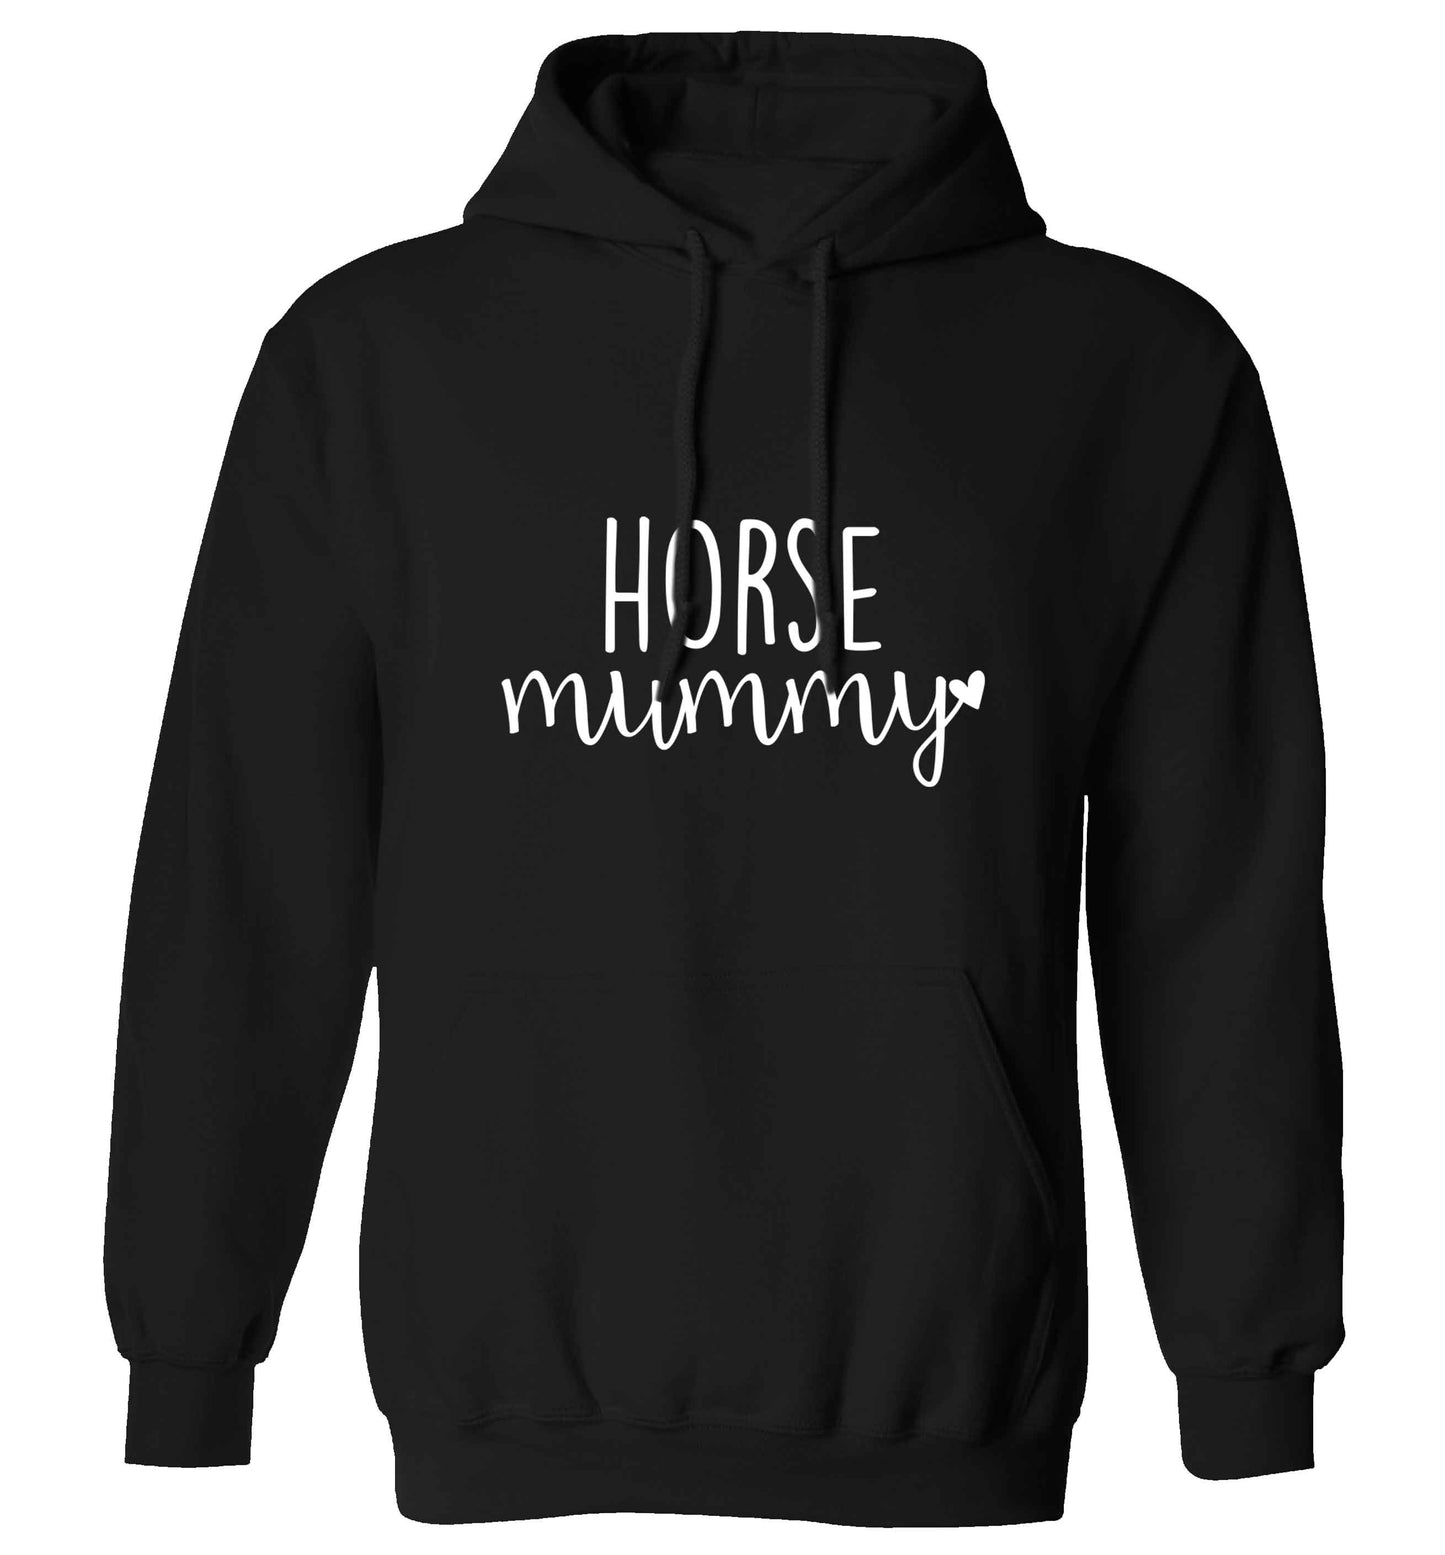 Horse mummy adults unisex black hoodie 2XL